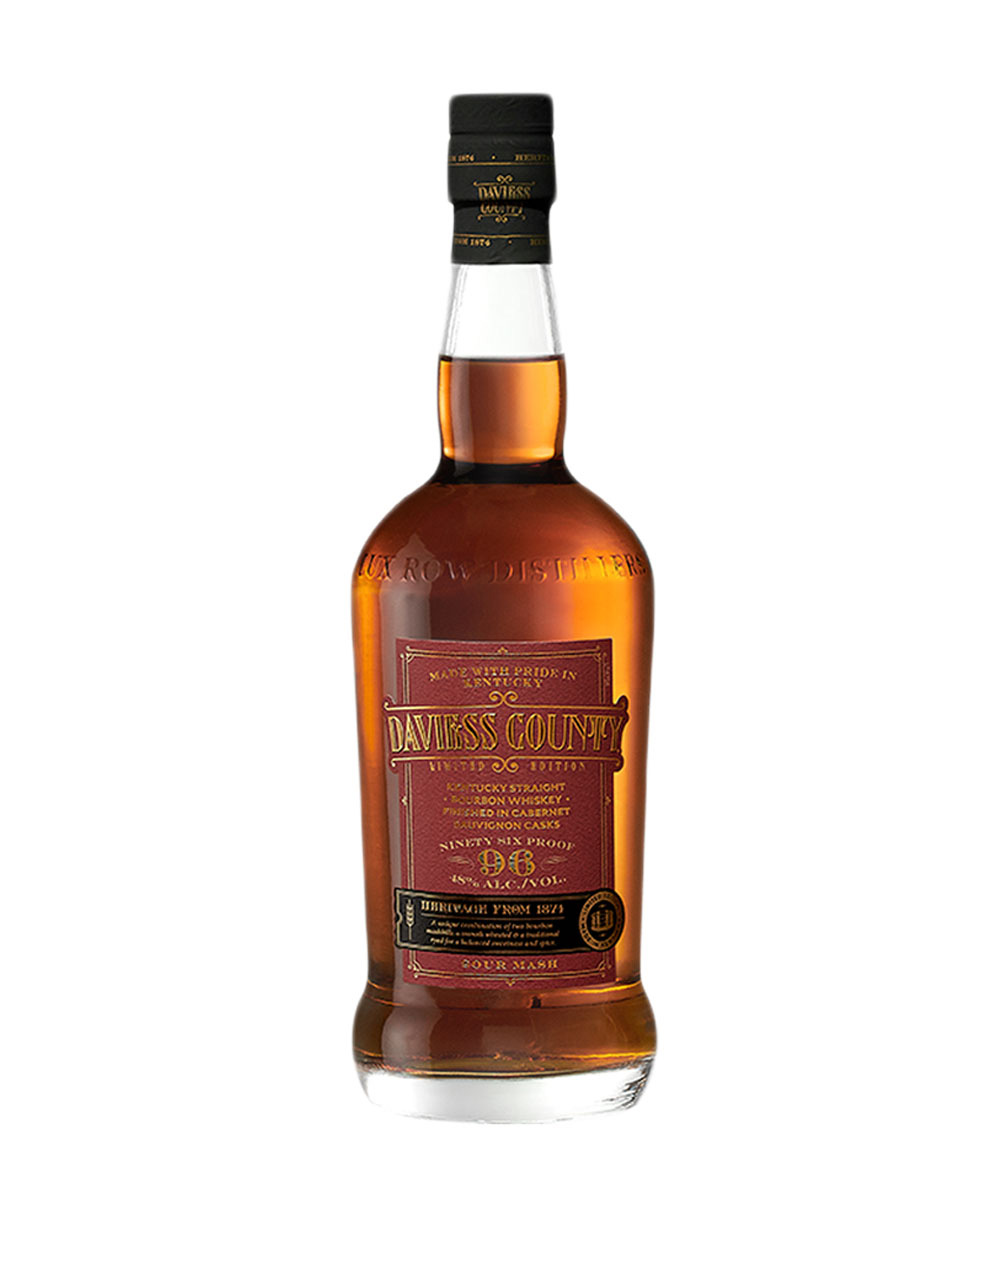 Daviess County sour mash 96 proof limited edition Sauvignon Casks Kentucky Straight Bourbon Whiskey